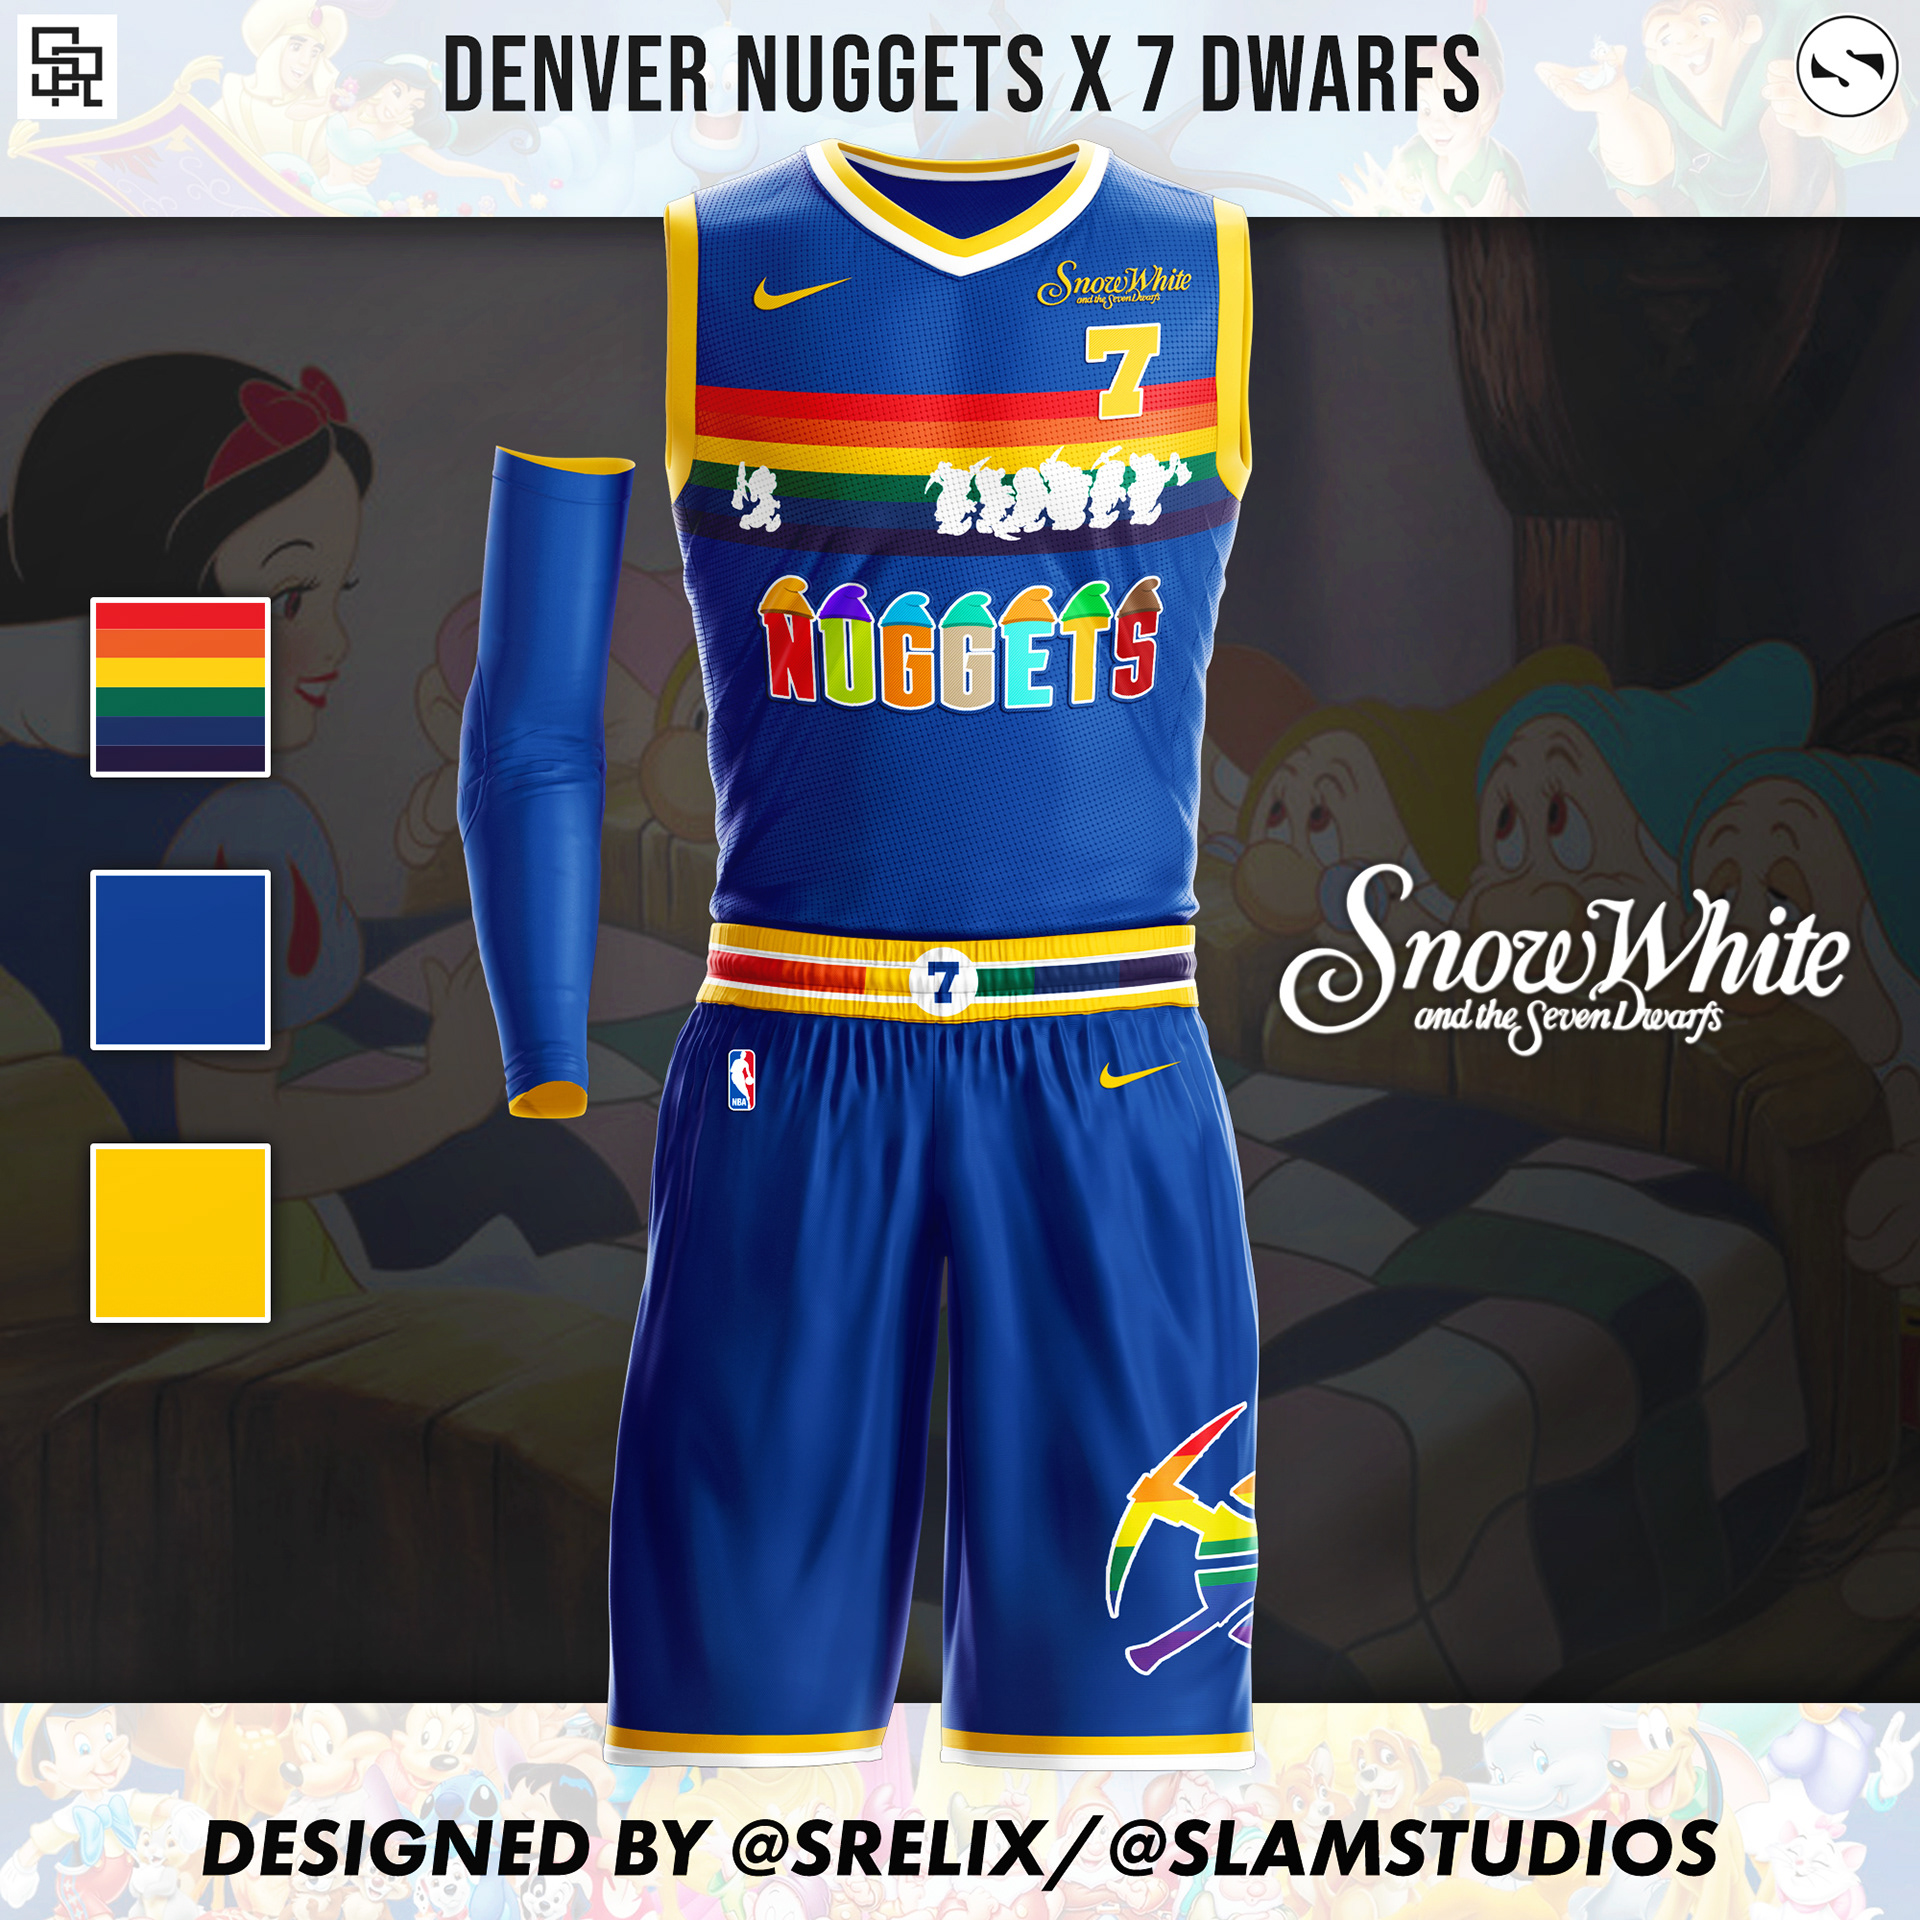 Charlotte Hornets x Blue Beetle jersey concept designed by @srelix